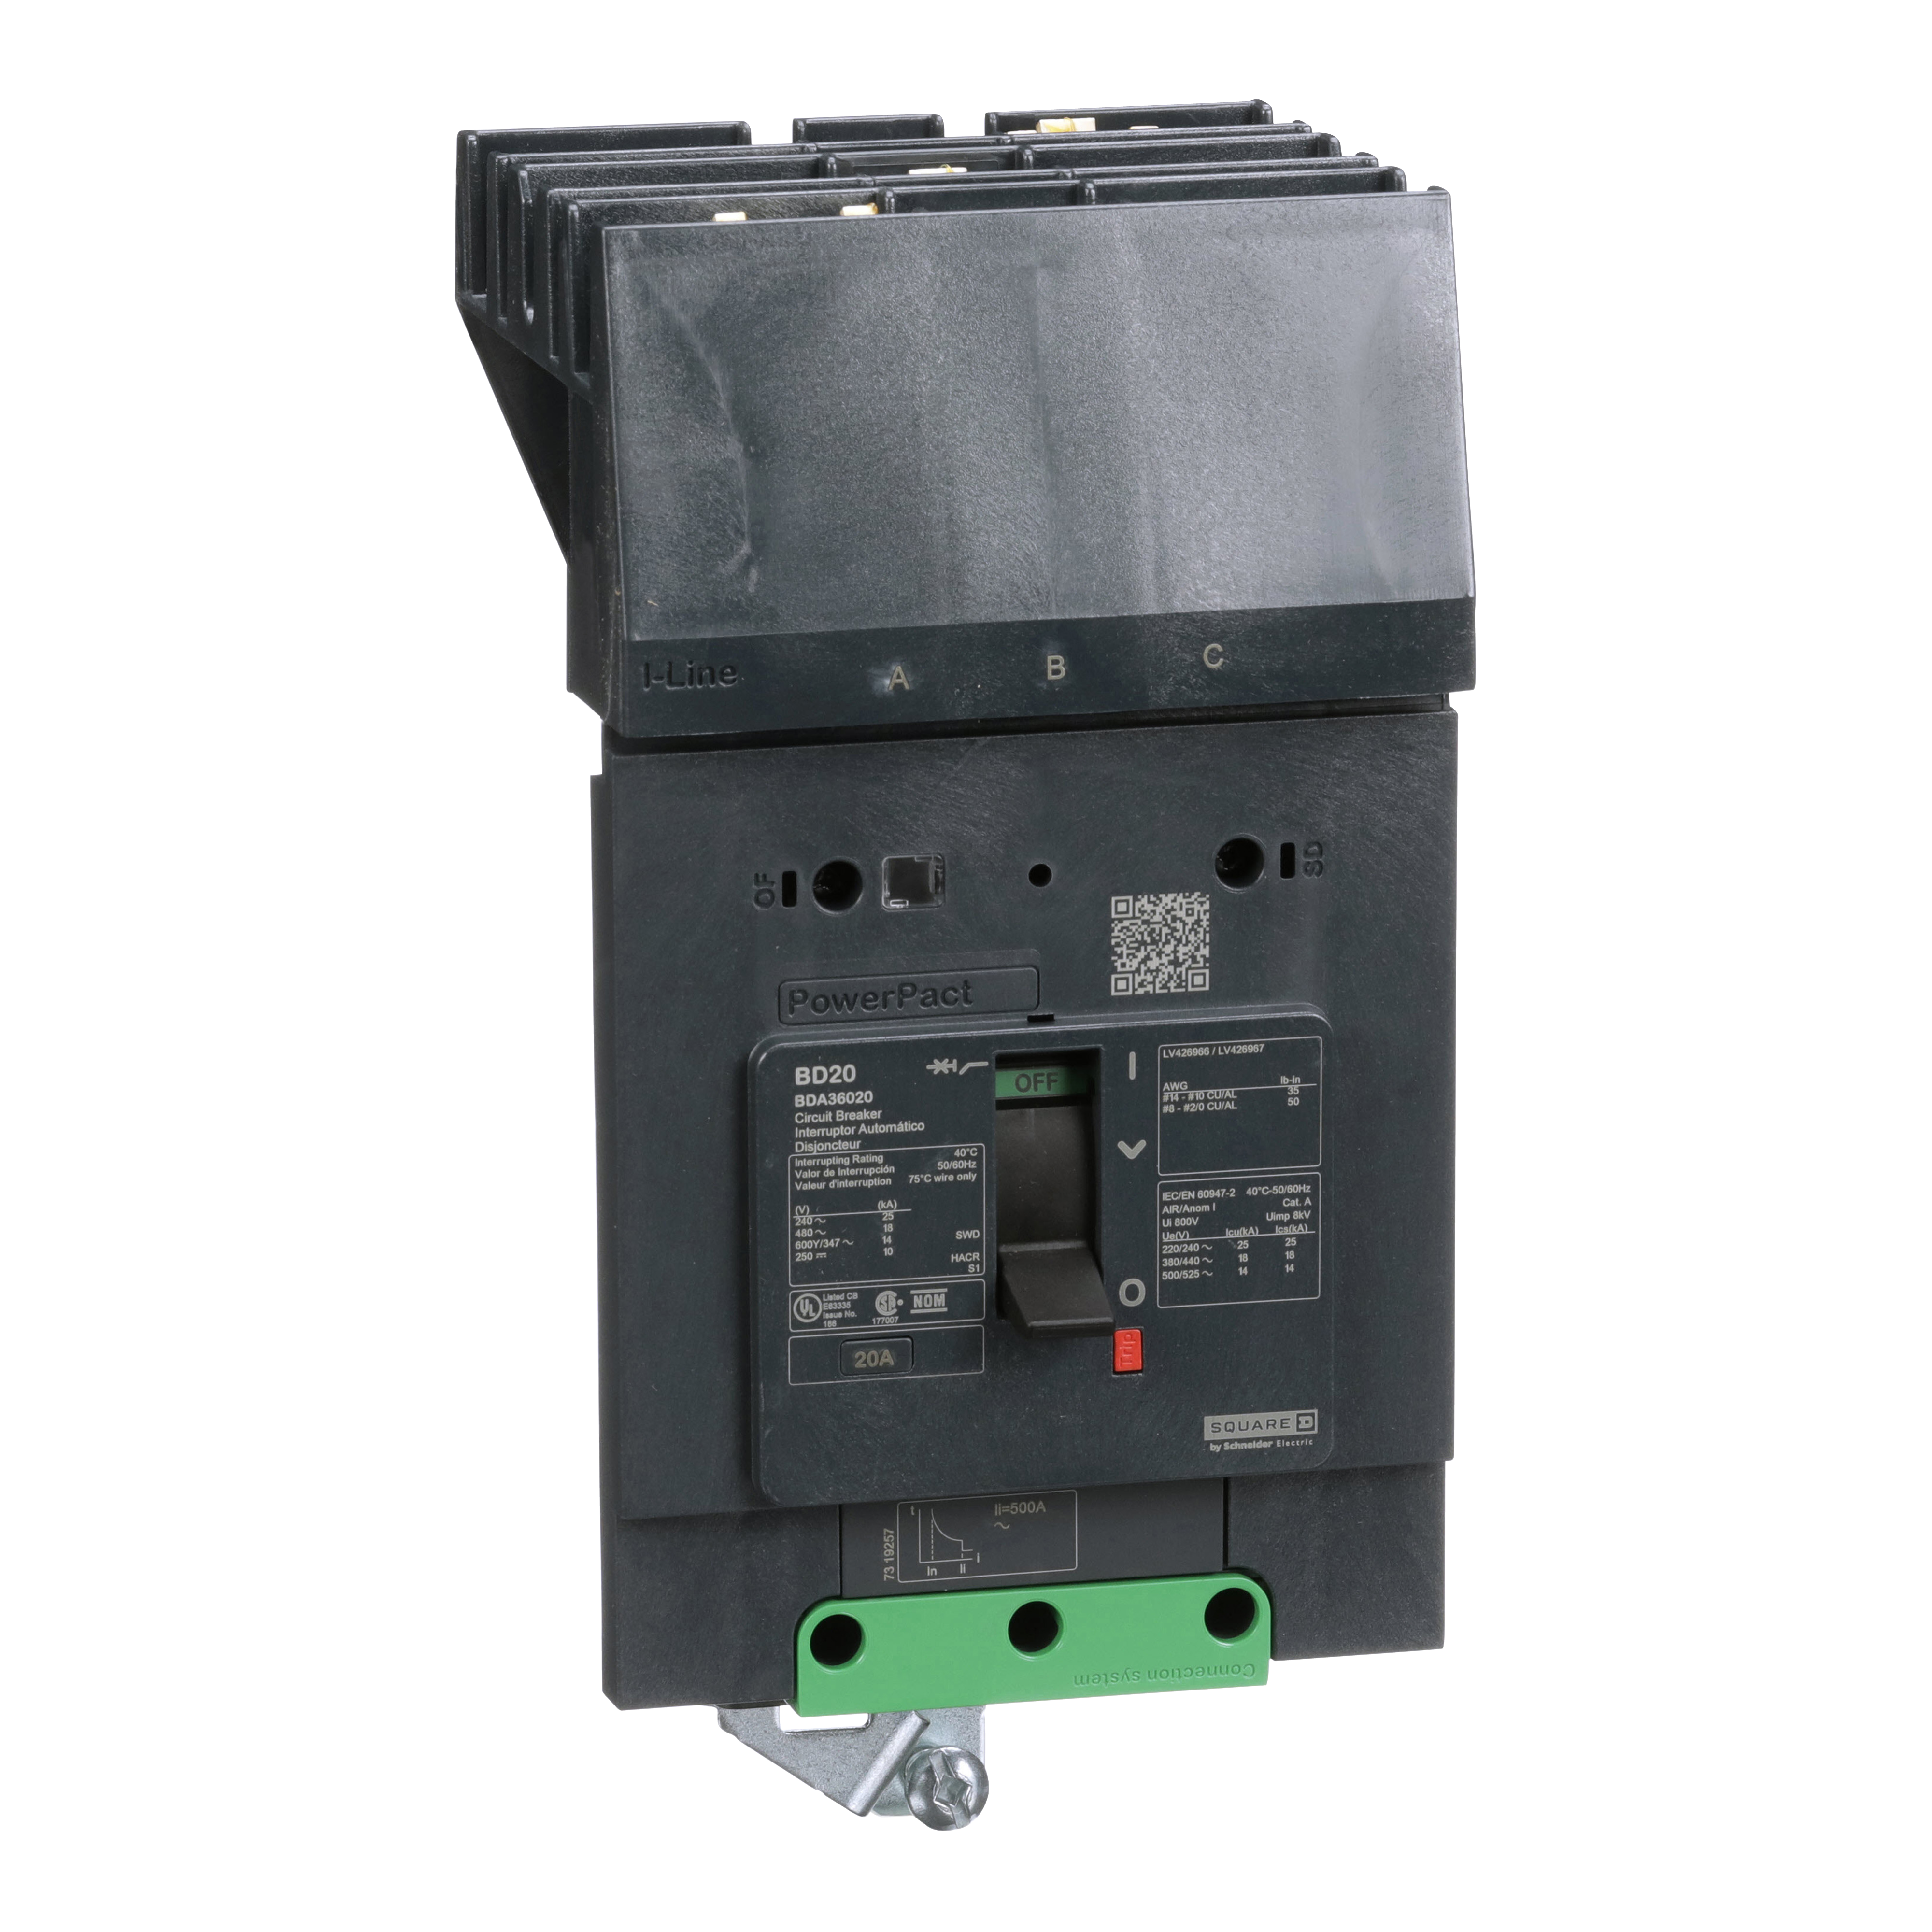 Square D Circuit Breaker HJA36020 I Line 20 A 240/600V PowerPact 